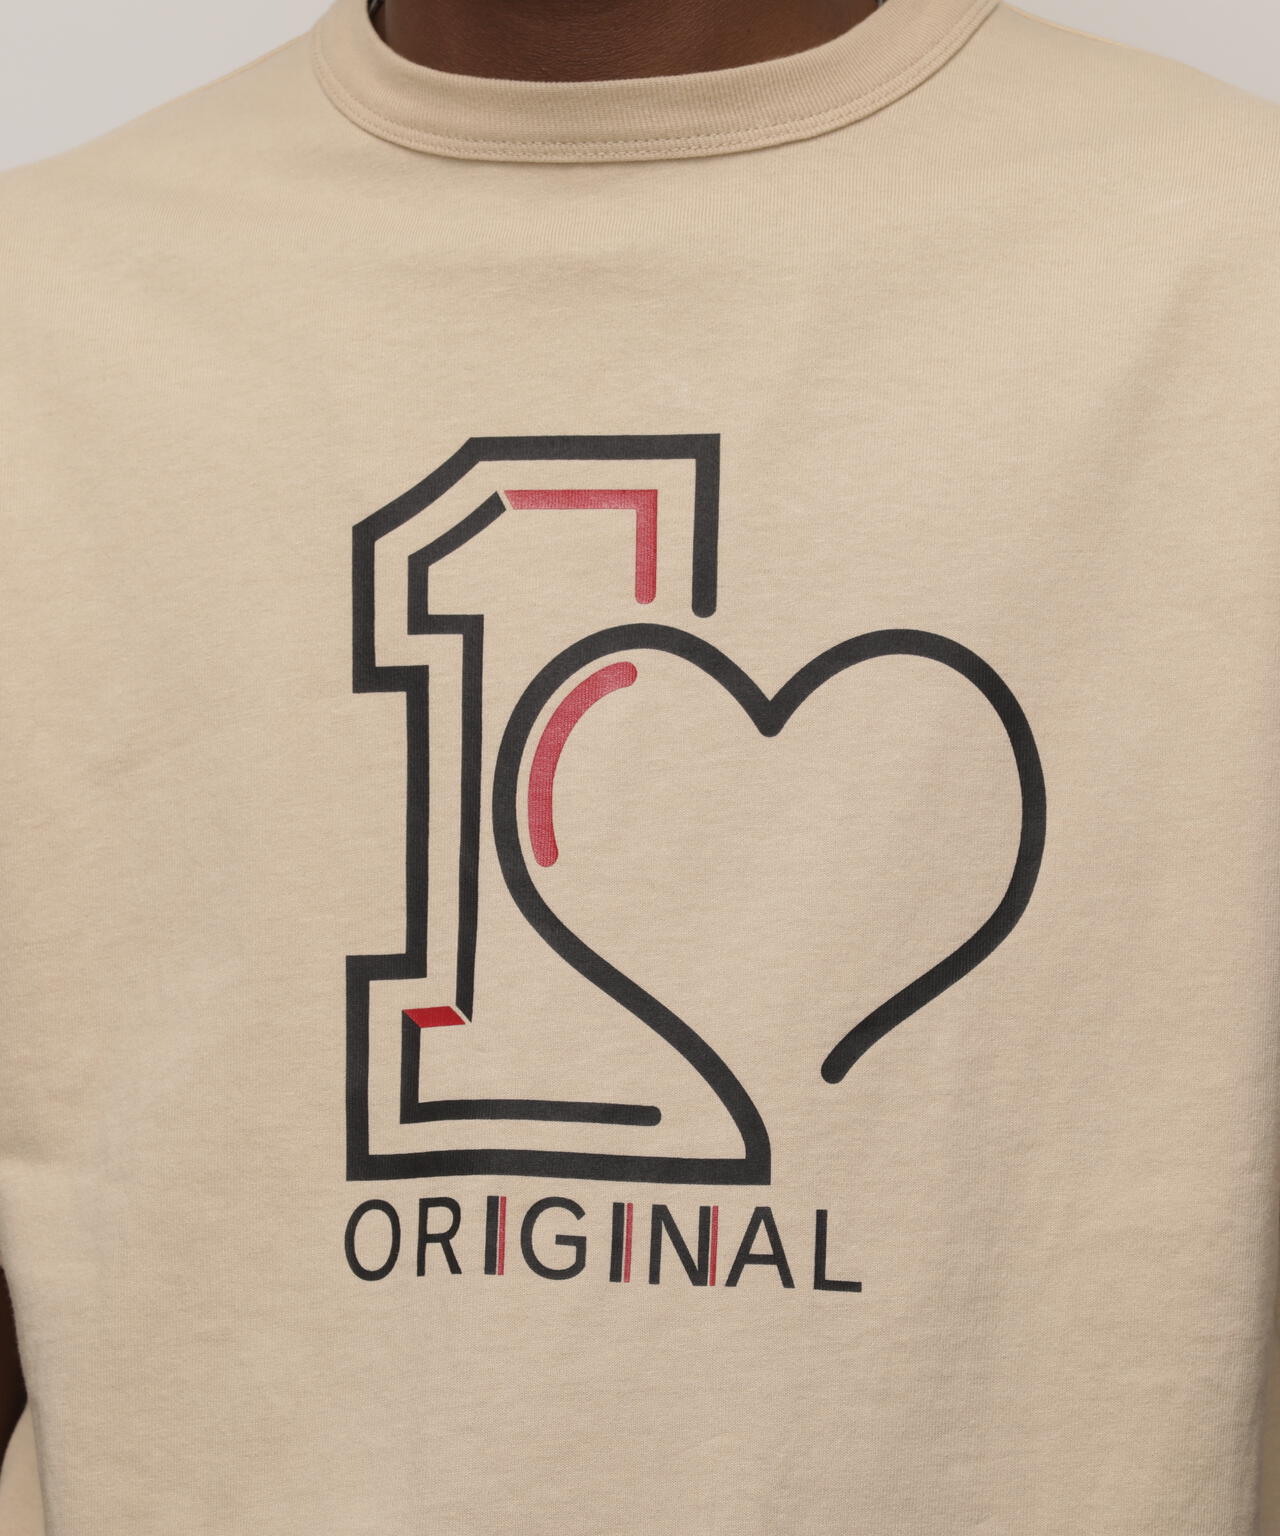 T-SHIRT "ORIGINAL HEART"/Tシャツ "オリジナルハート"